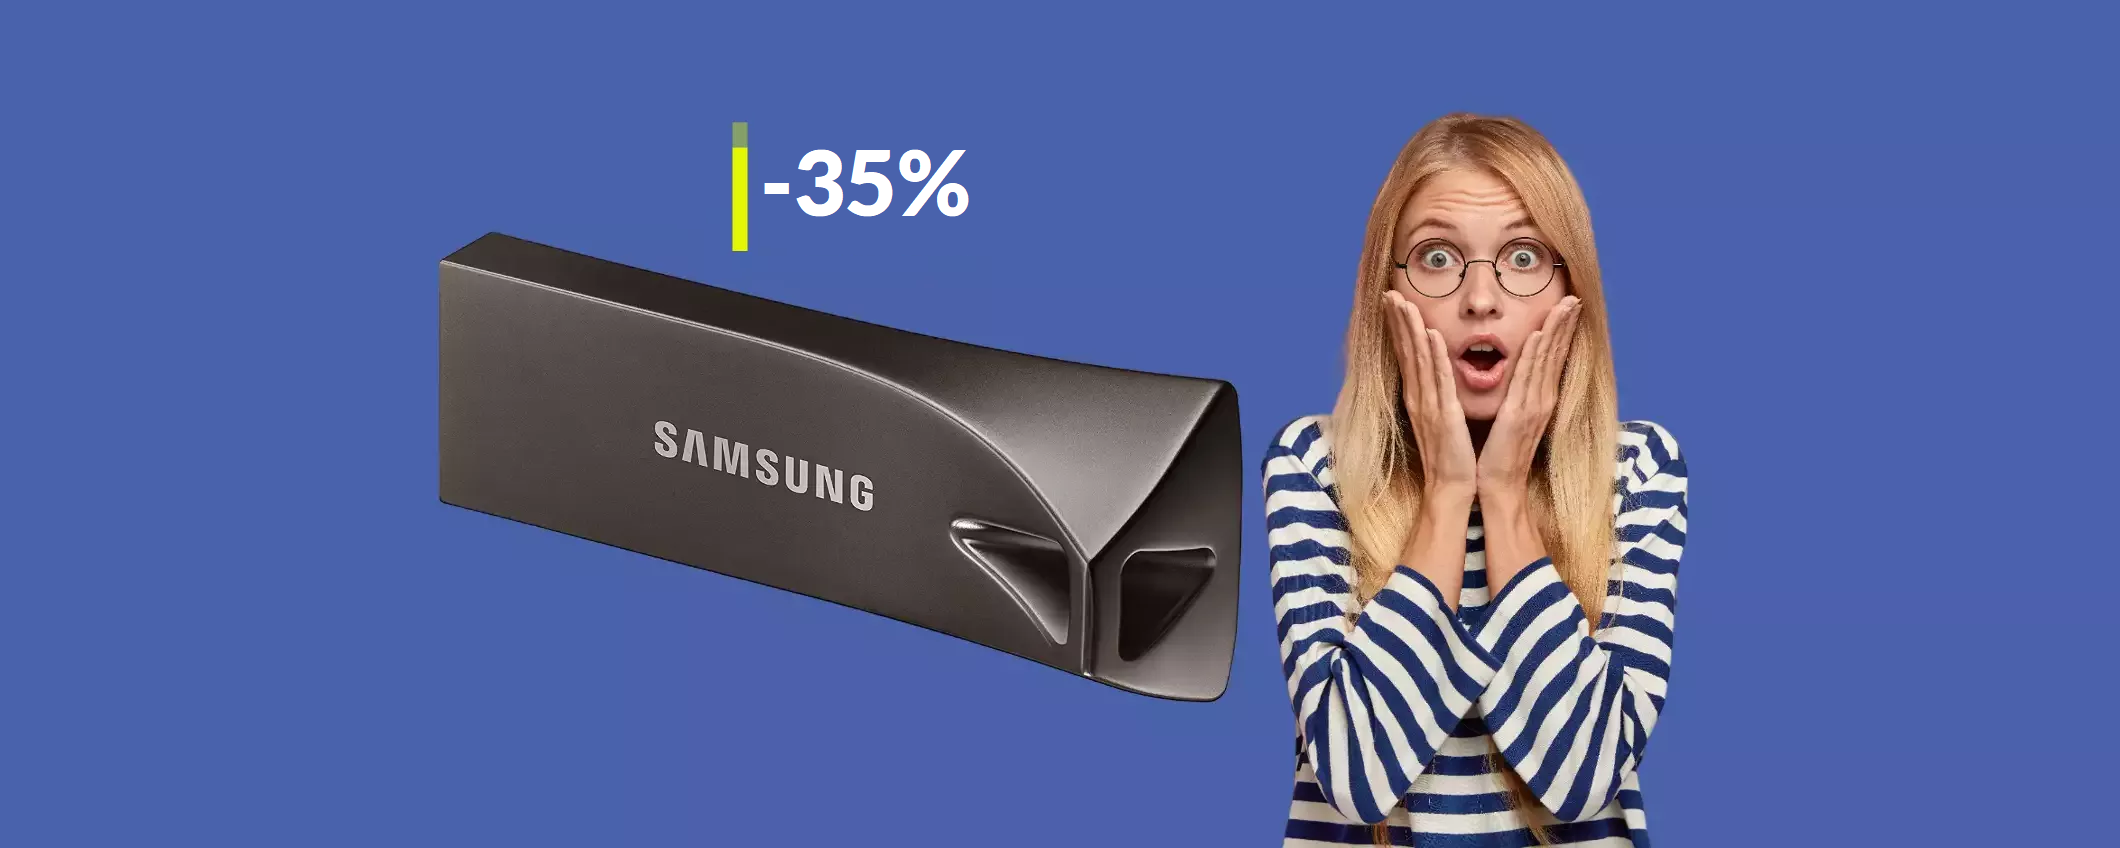 Chiavetta USB Samsung 128GB oggi a soli 25€: scorte limitate